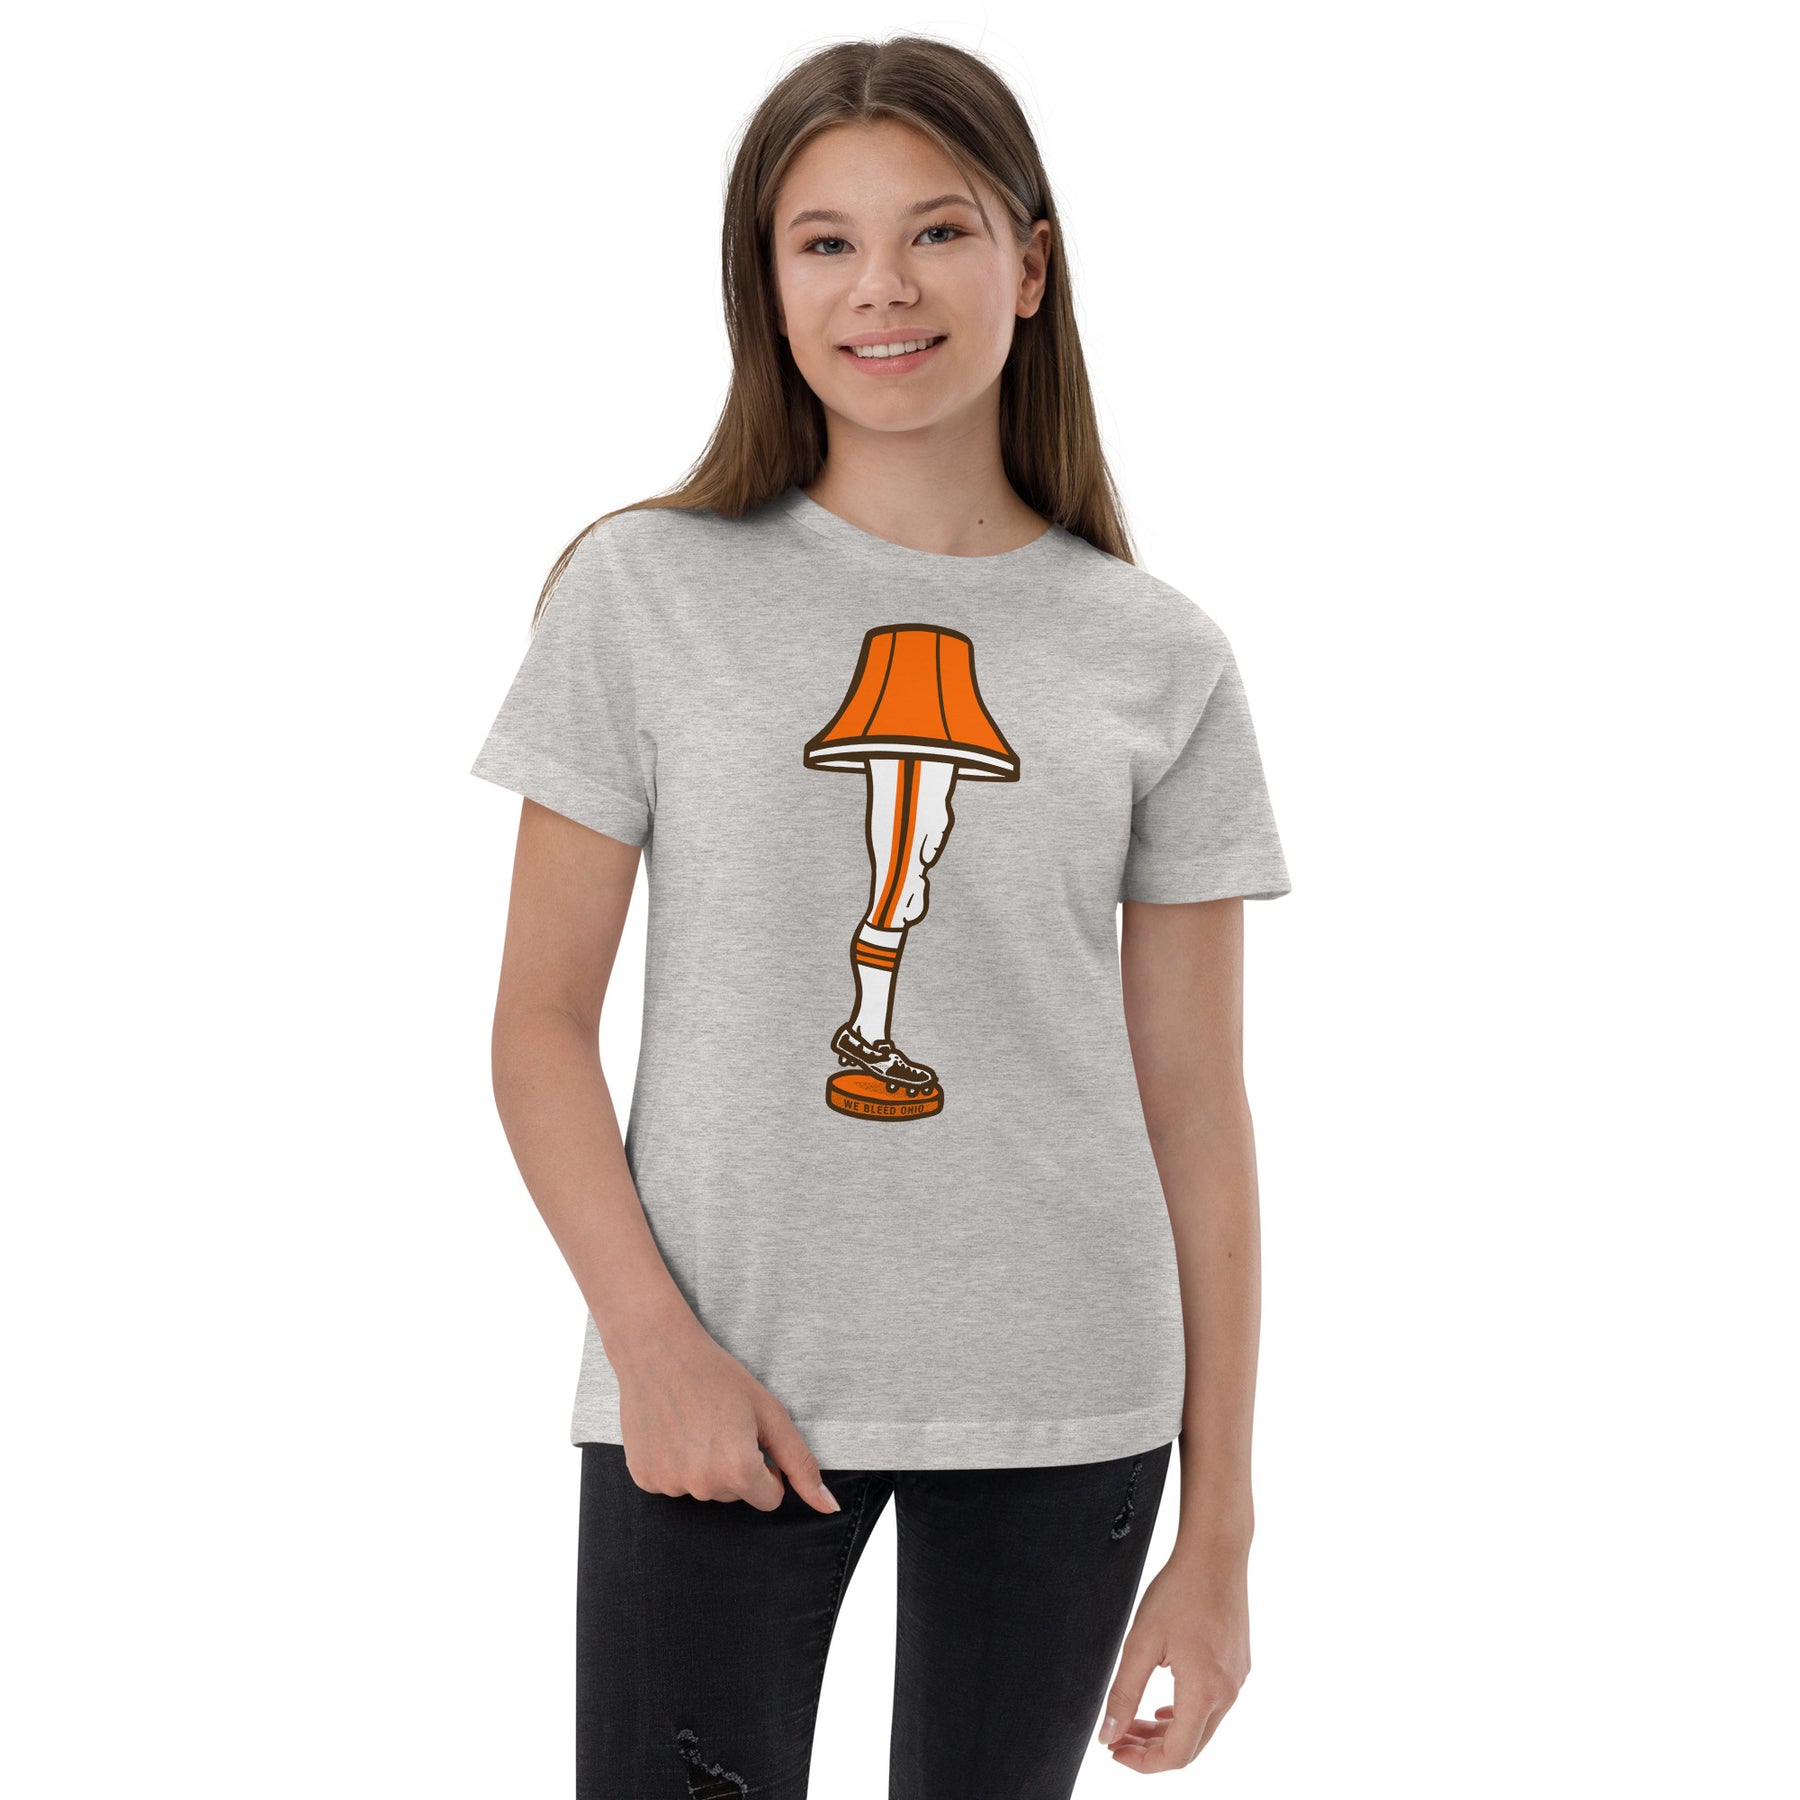 Football Leg Lamp – Youth T-shirt, Shirts & Tops, WeBleedOhio, WeBleedOhio